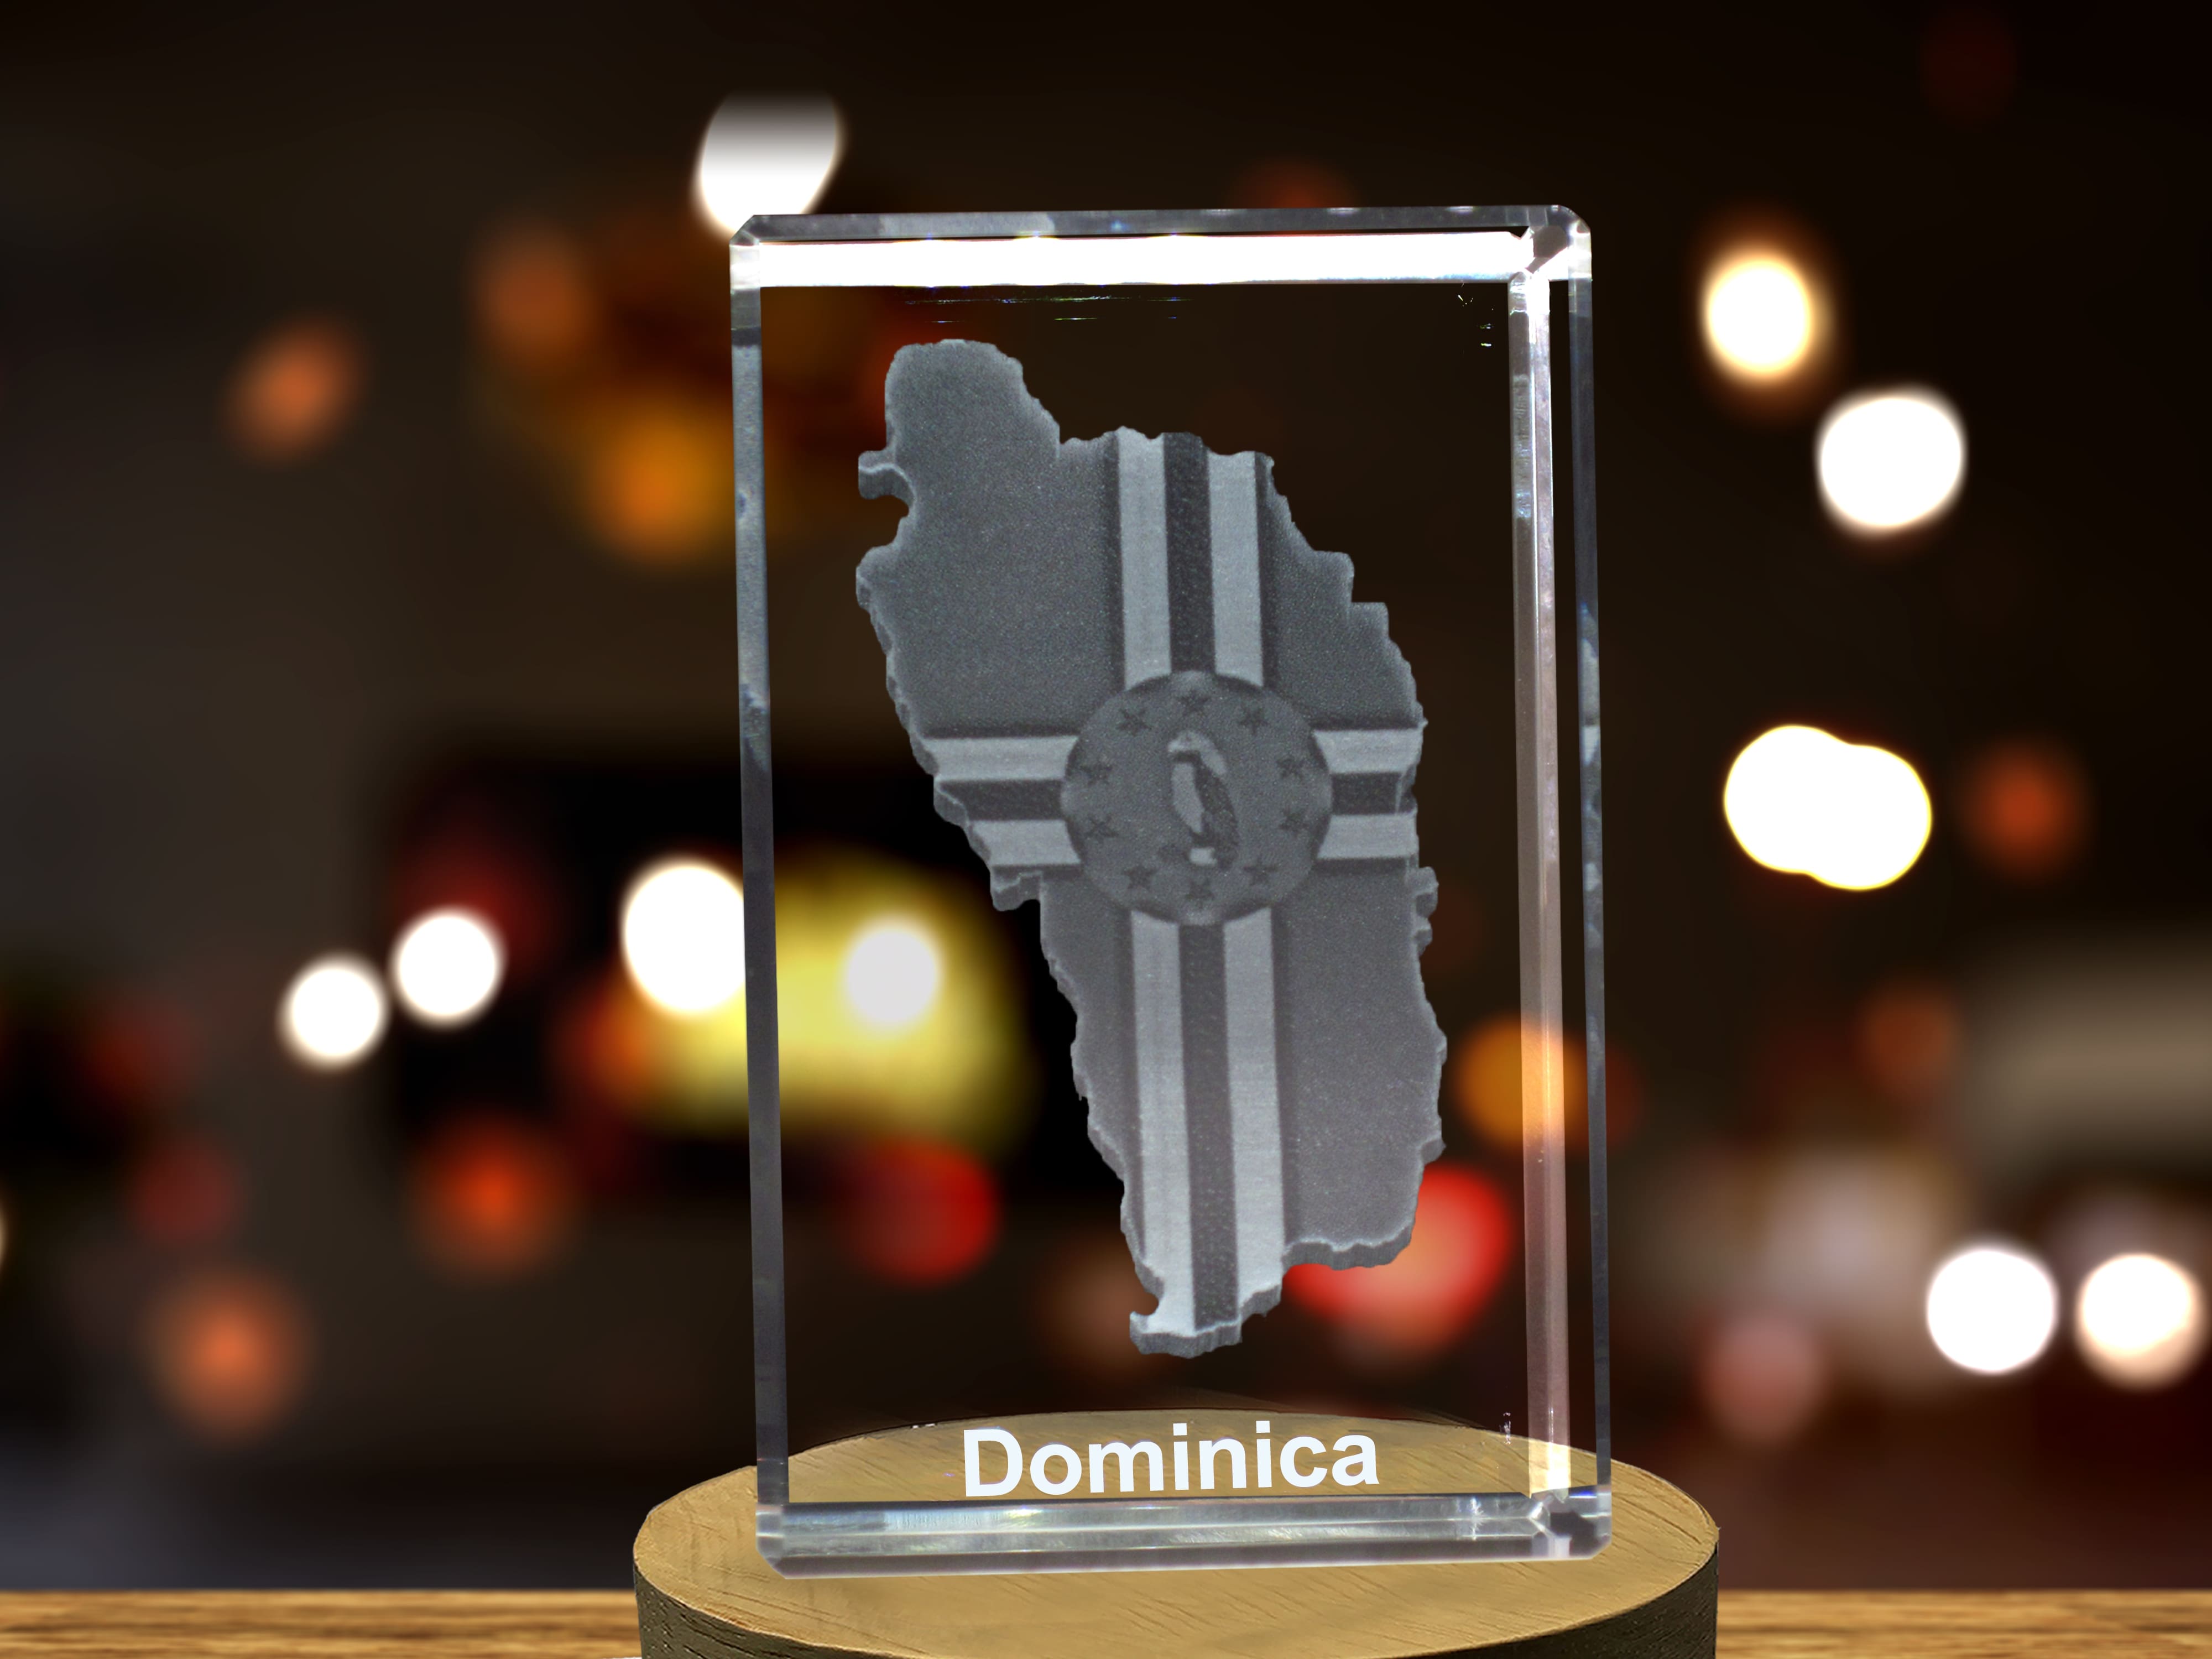 Dominica 3D Engraved Crystal 3D Engraved Crystal Keepsake/Gift/Decor/Collectible/Souvenir A&B Crystal Collection